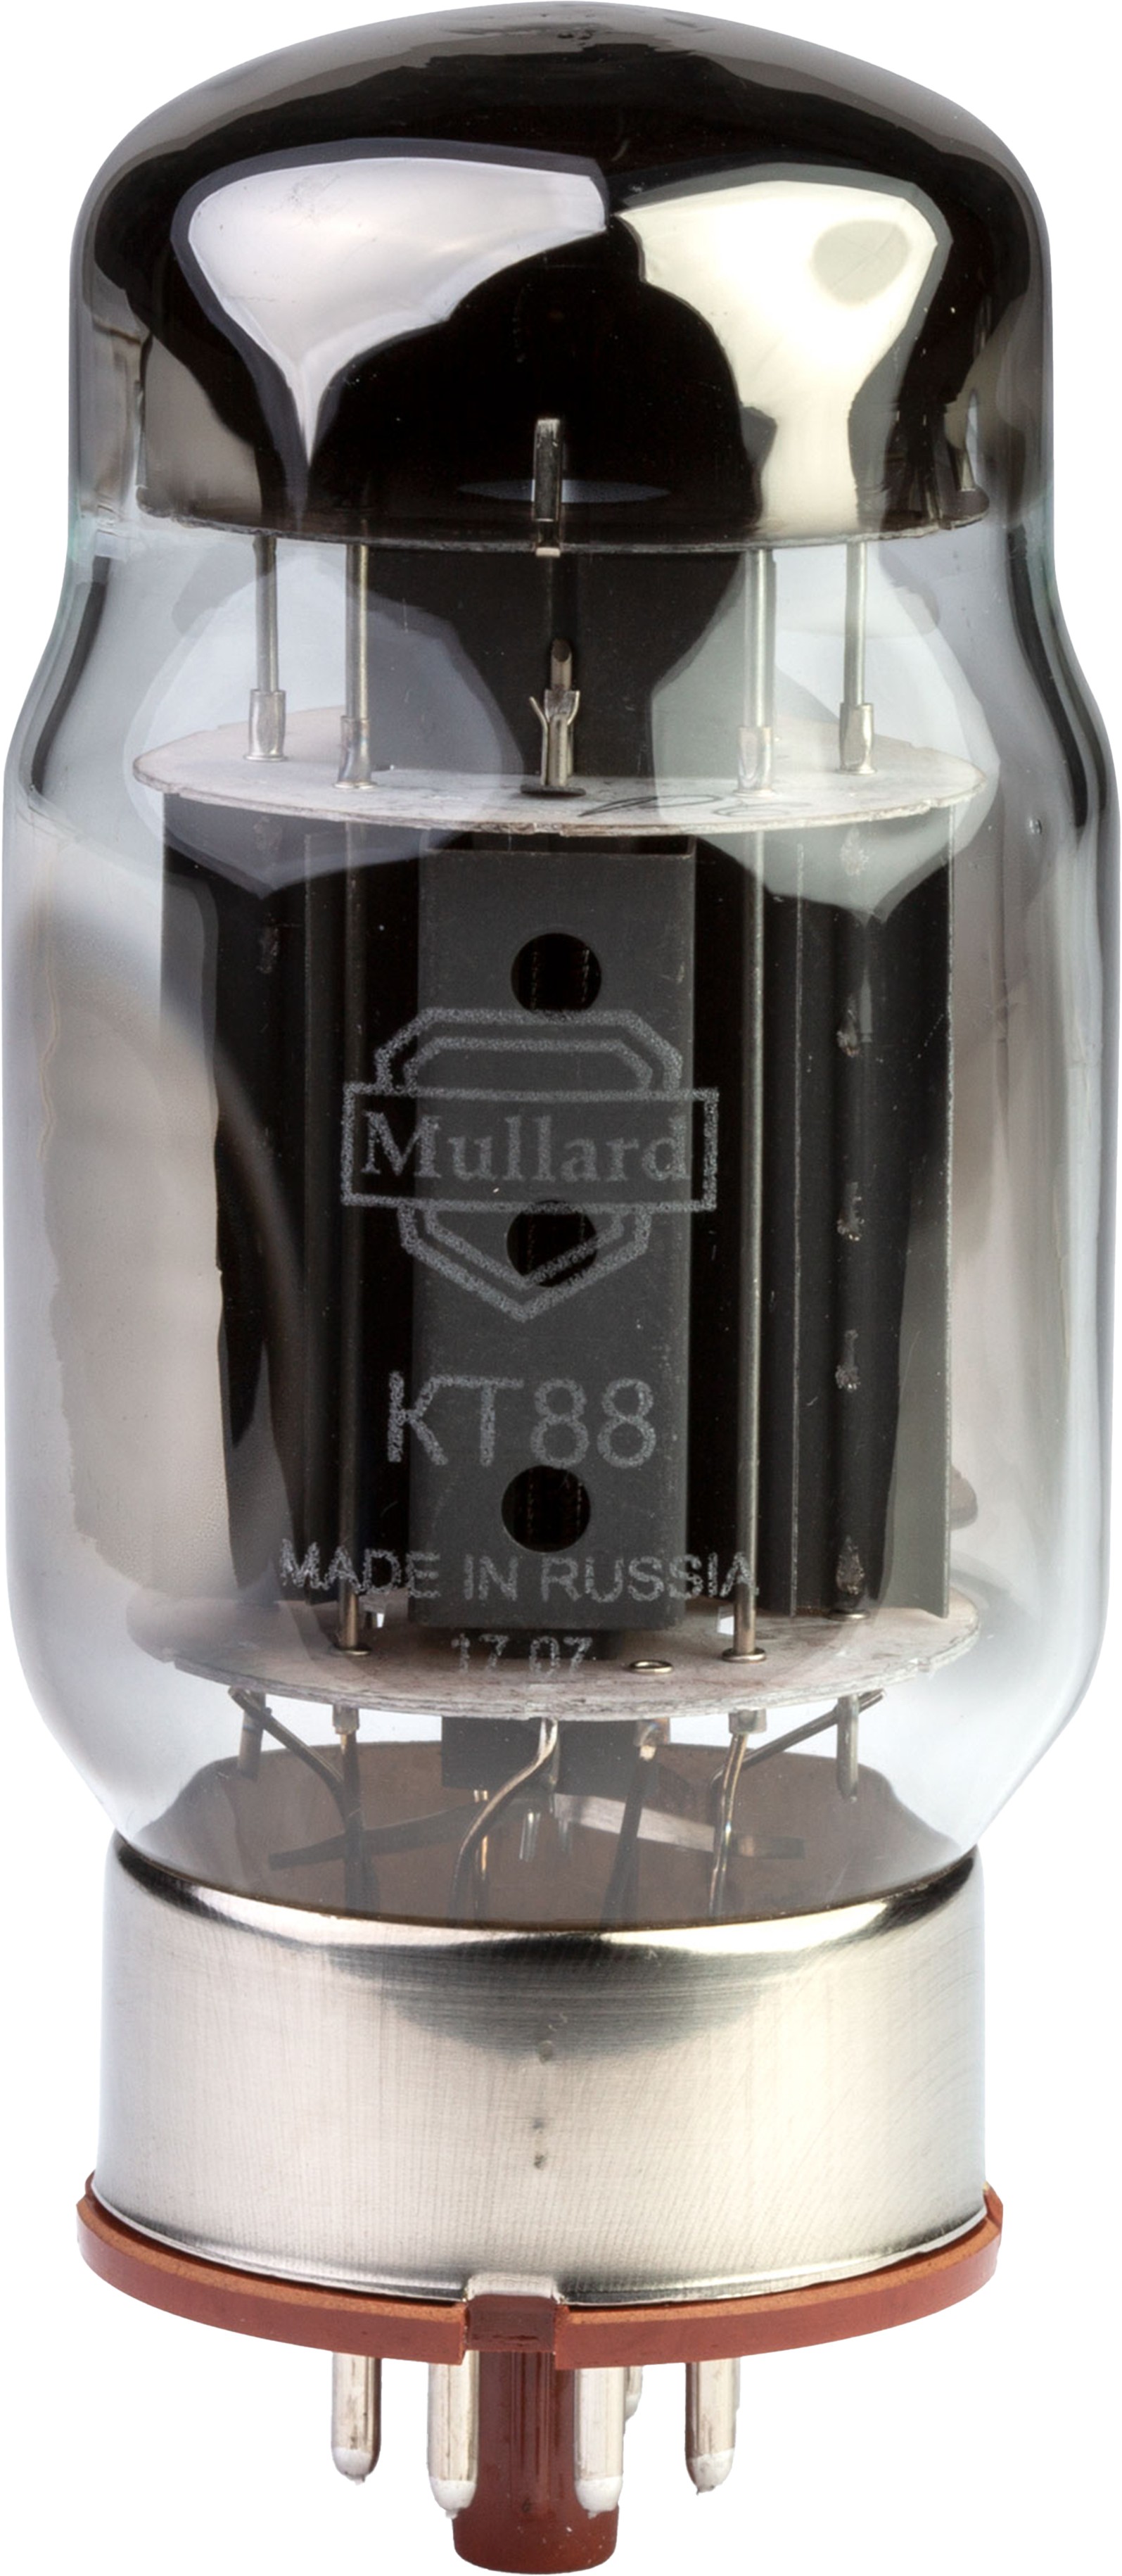 MULLARD KT88 Tetrode Tube